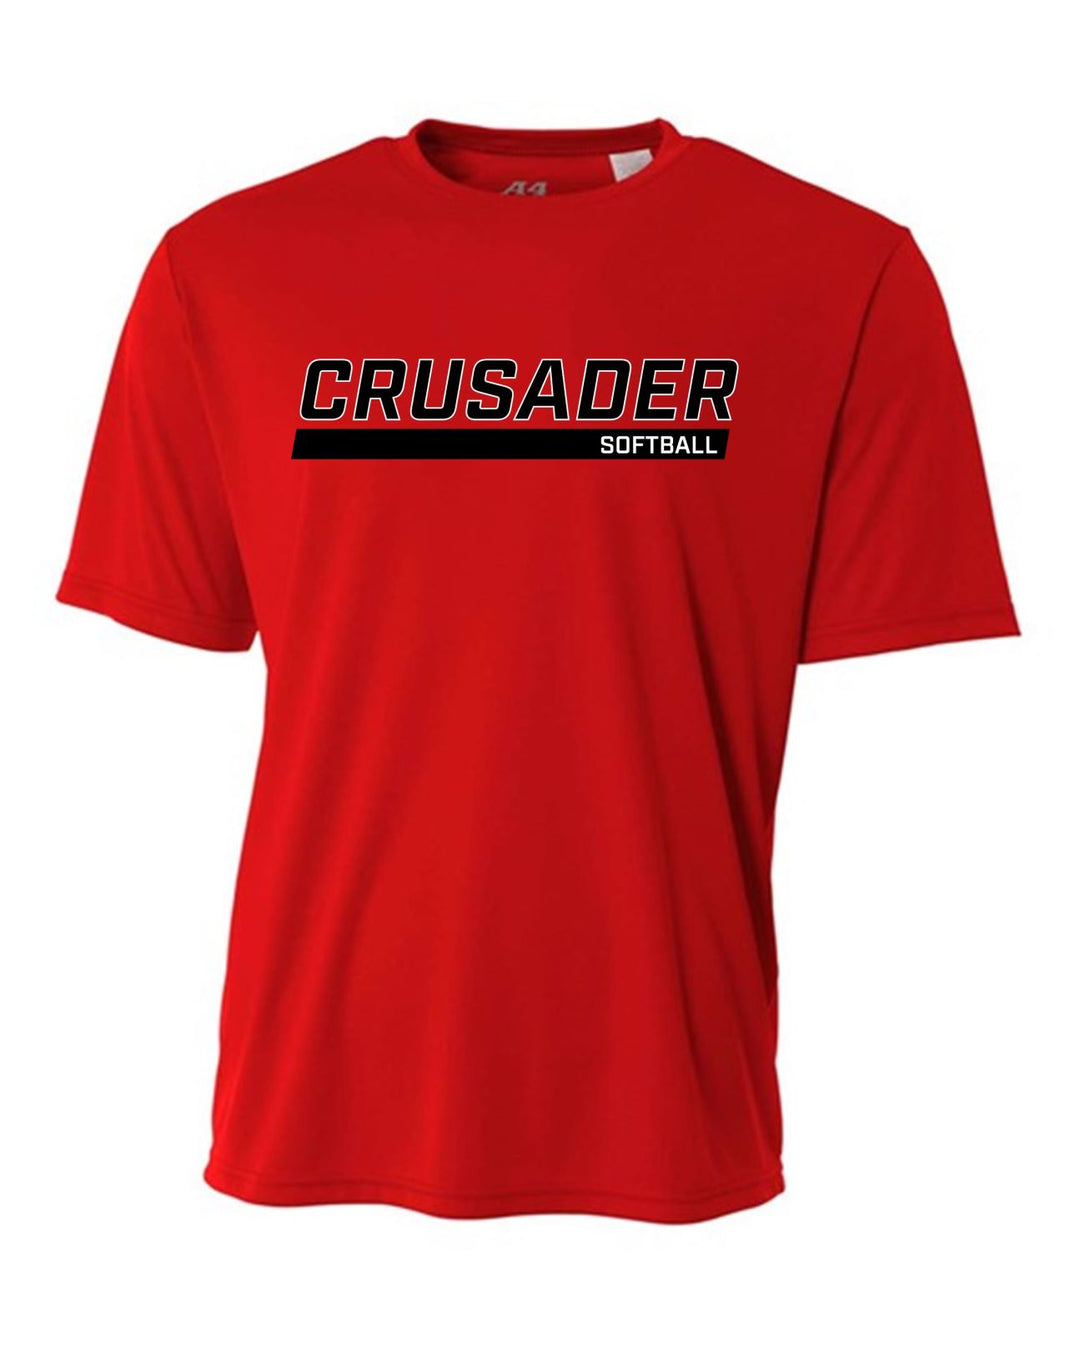 WCU Softball Men's Short-Sleeve Performance Shirt WCU Softball Red CRUSADER - Third Coast Soccer